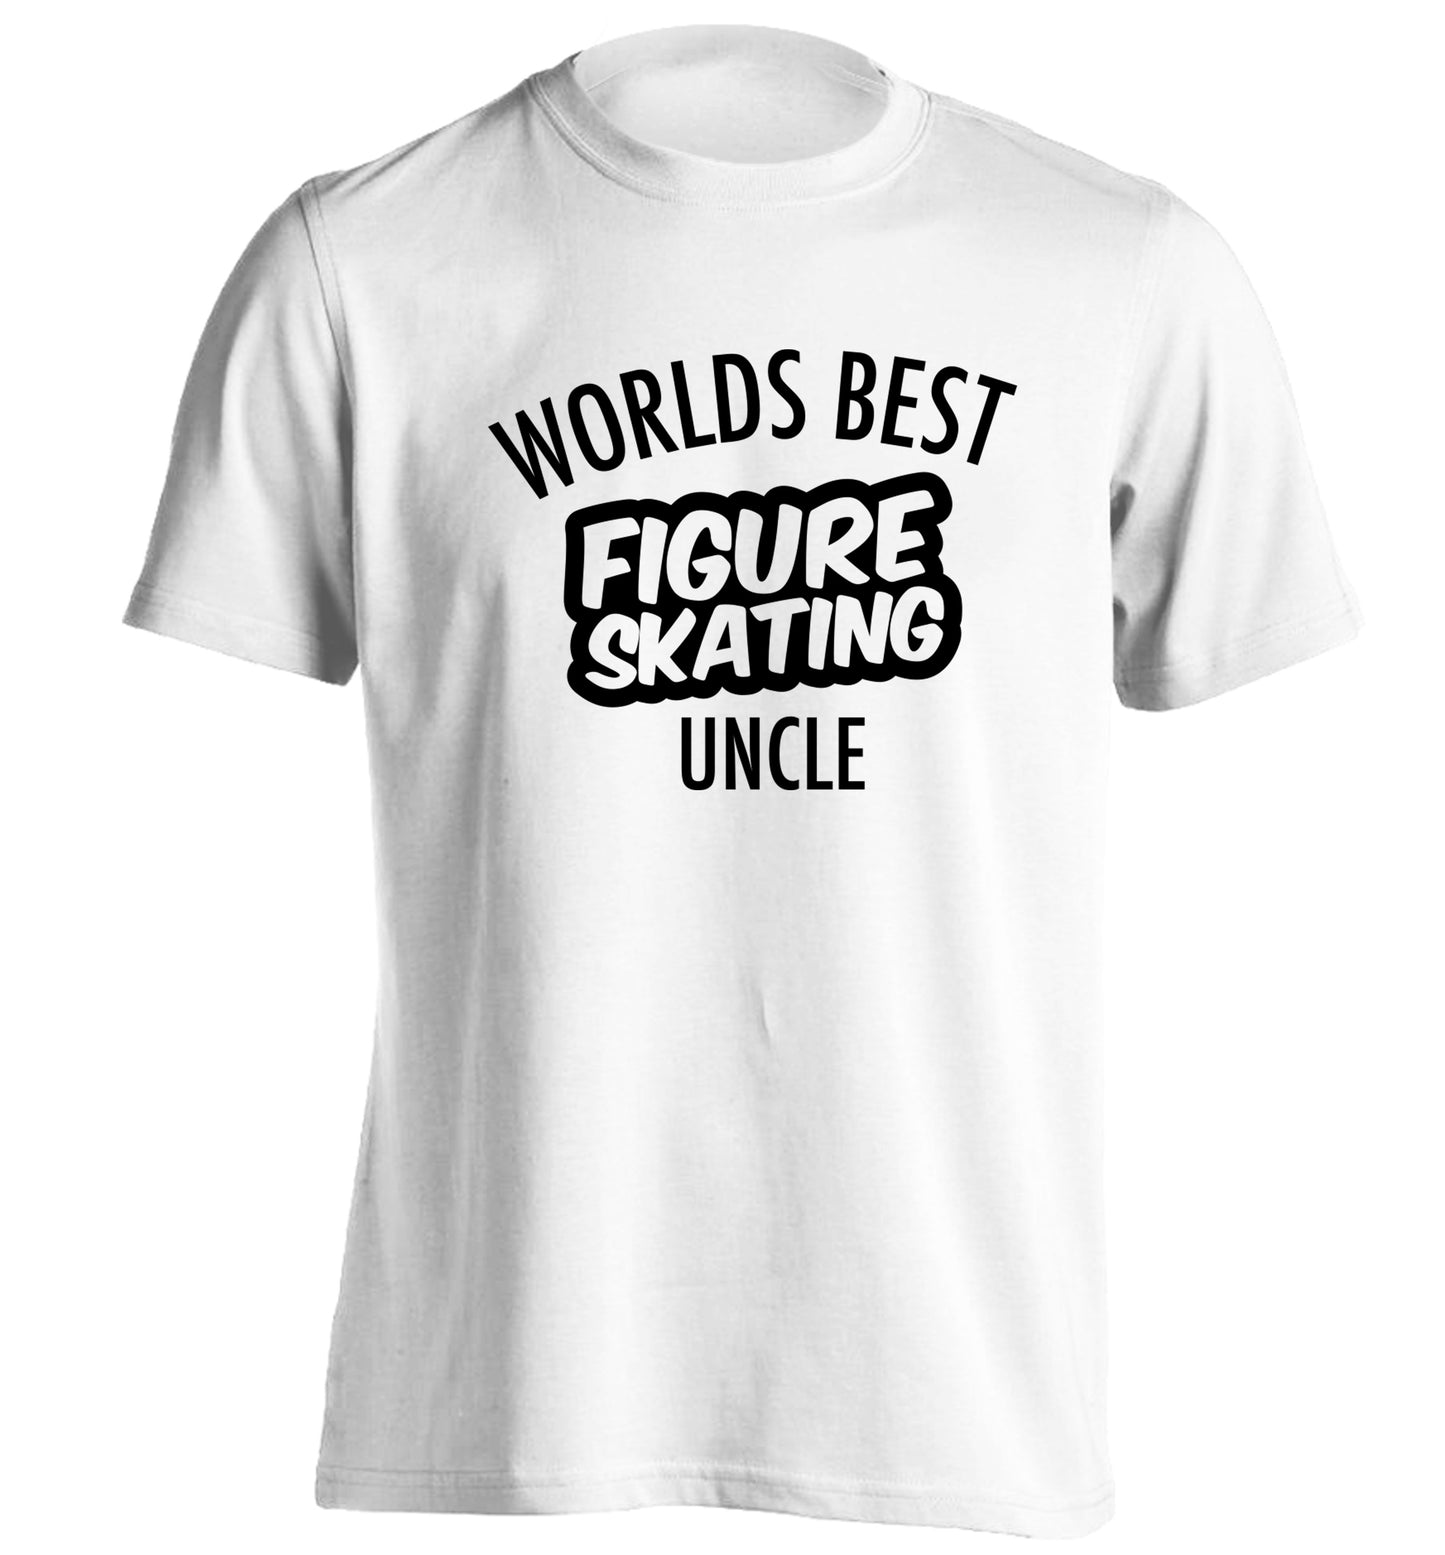 Worlds best figure skating uncle adults unisexwhite Tshirt 2XL